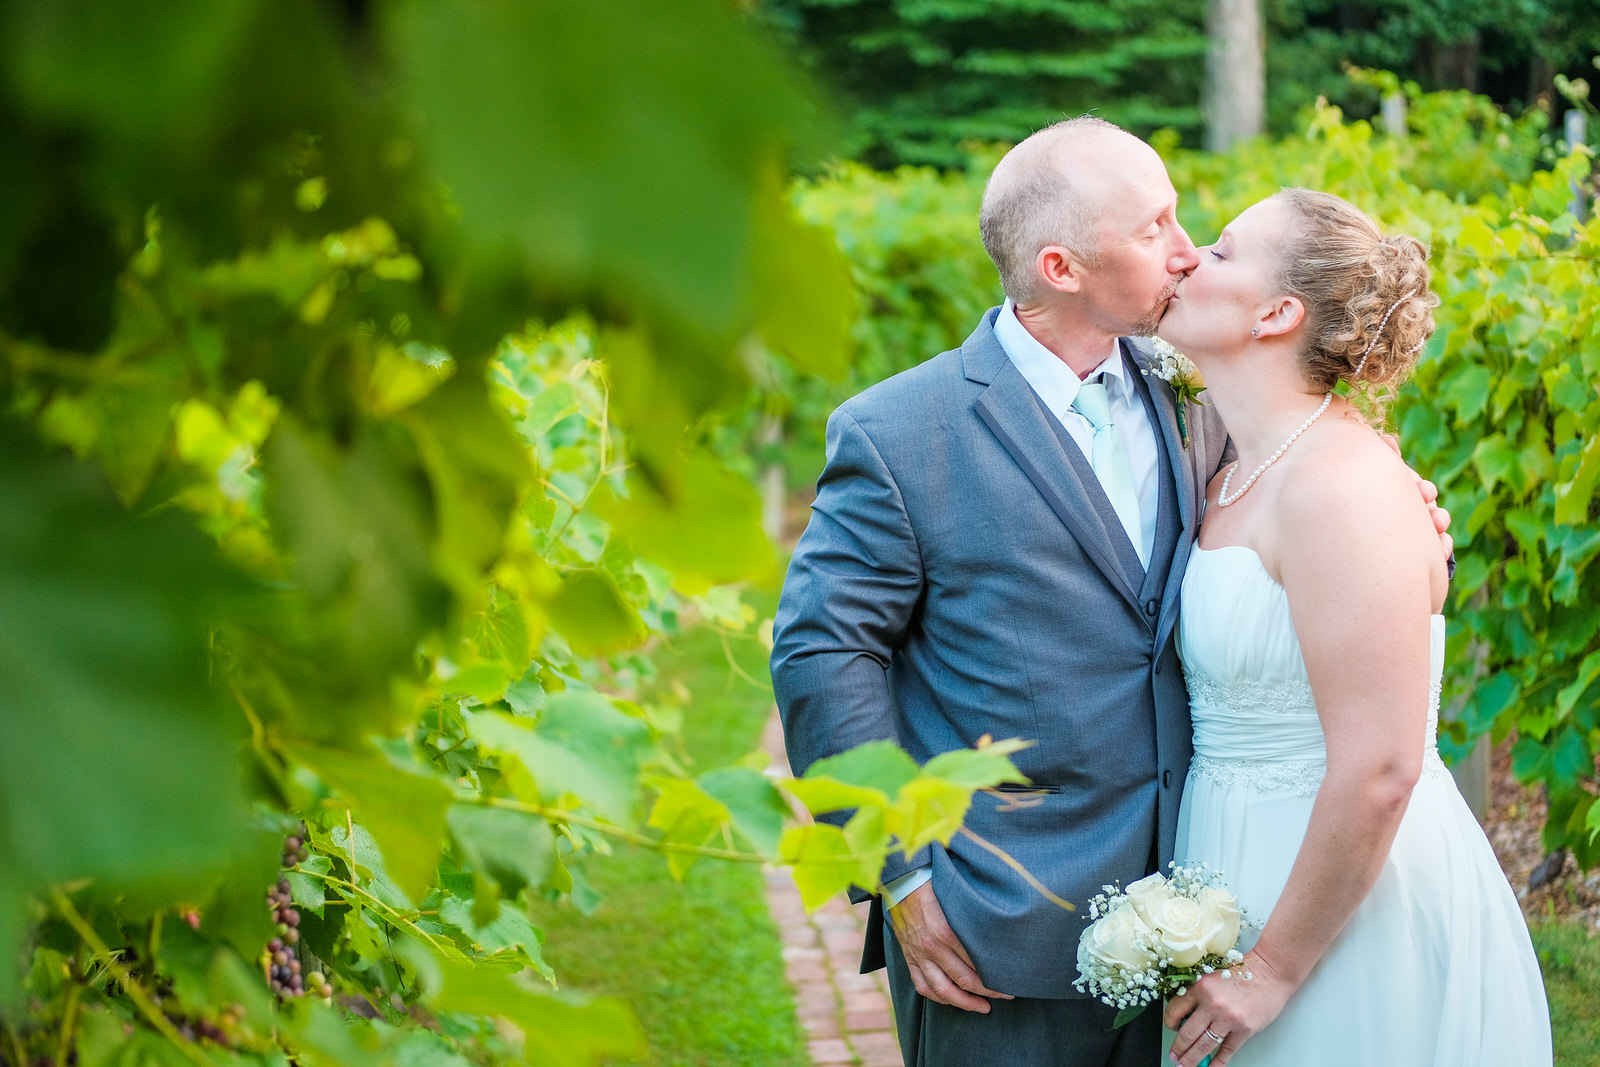 Zorvino-Vineyards-Summer-Wedding-Photography-1025.jpg